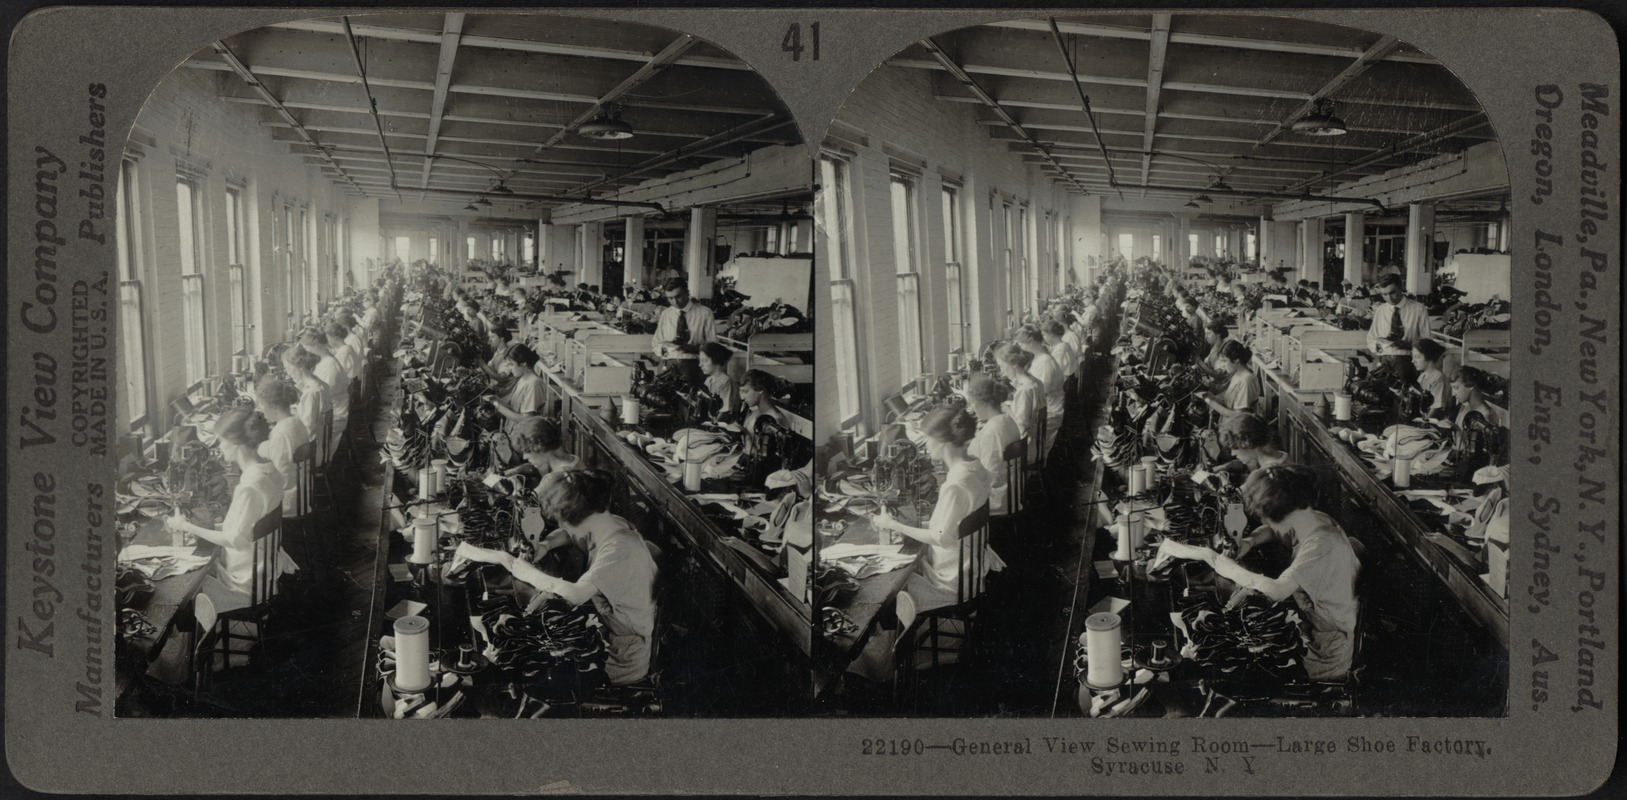 Sewing room in a large shoe factory, Syracuse, N.Y.